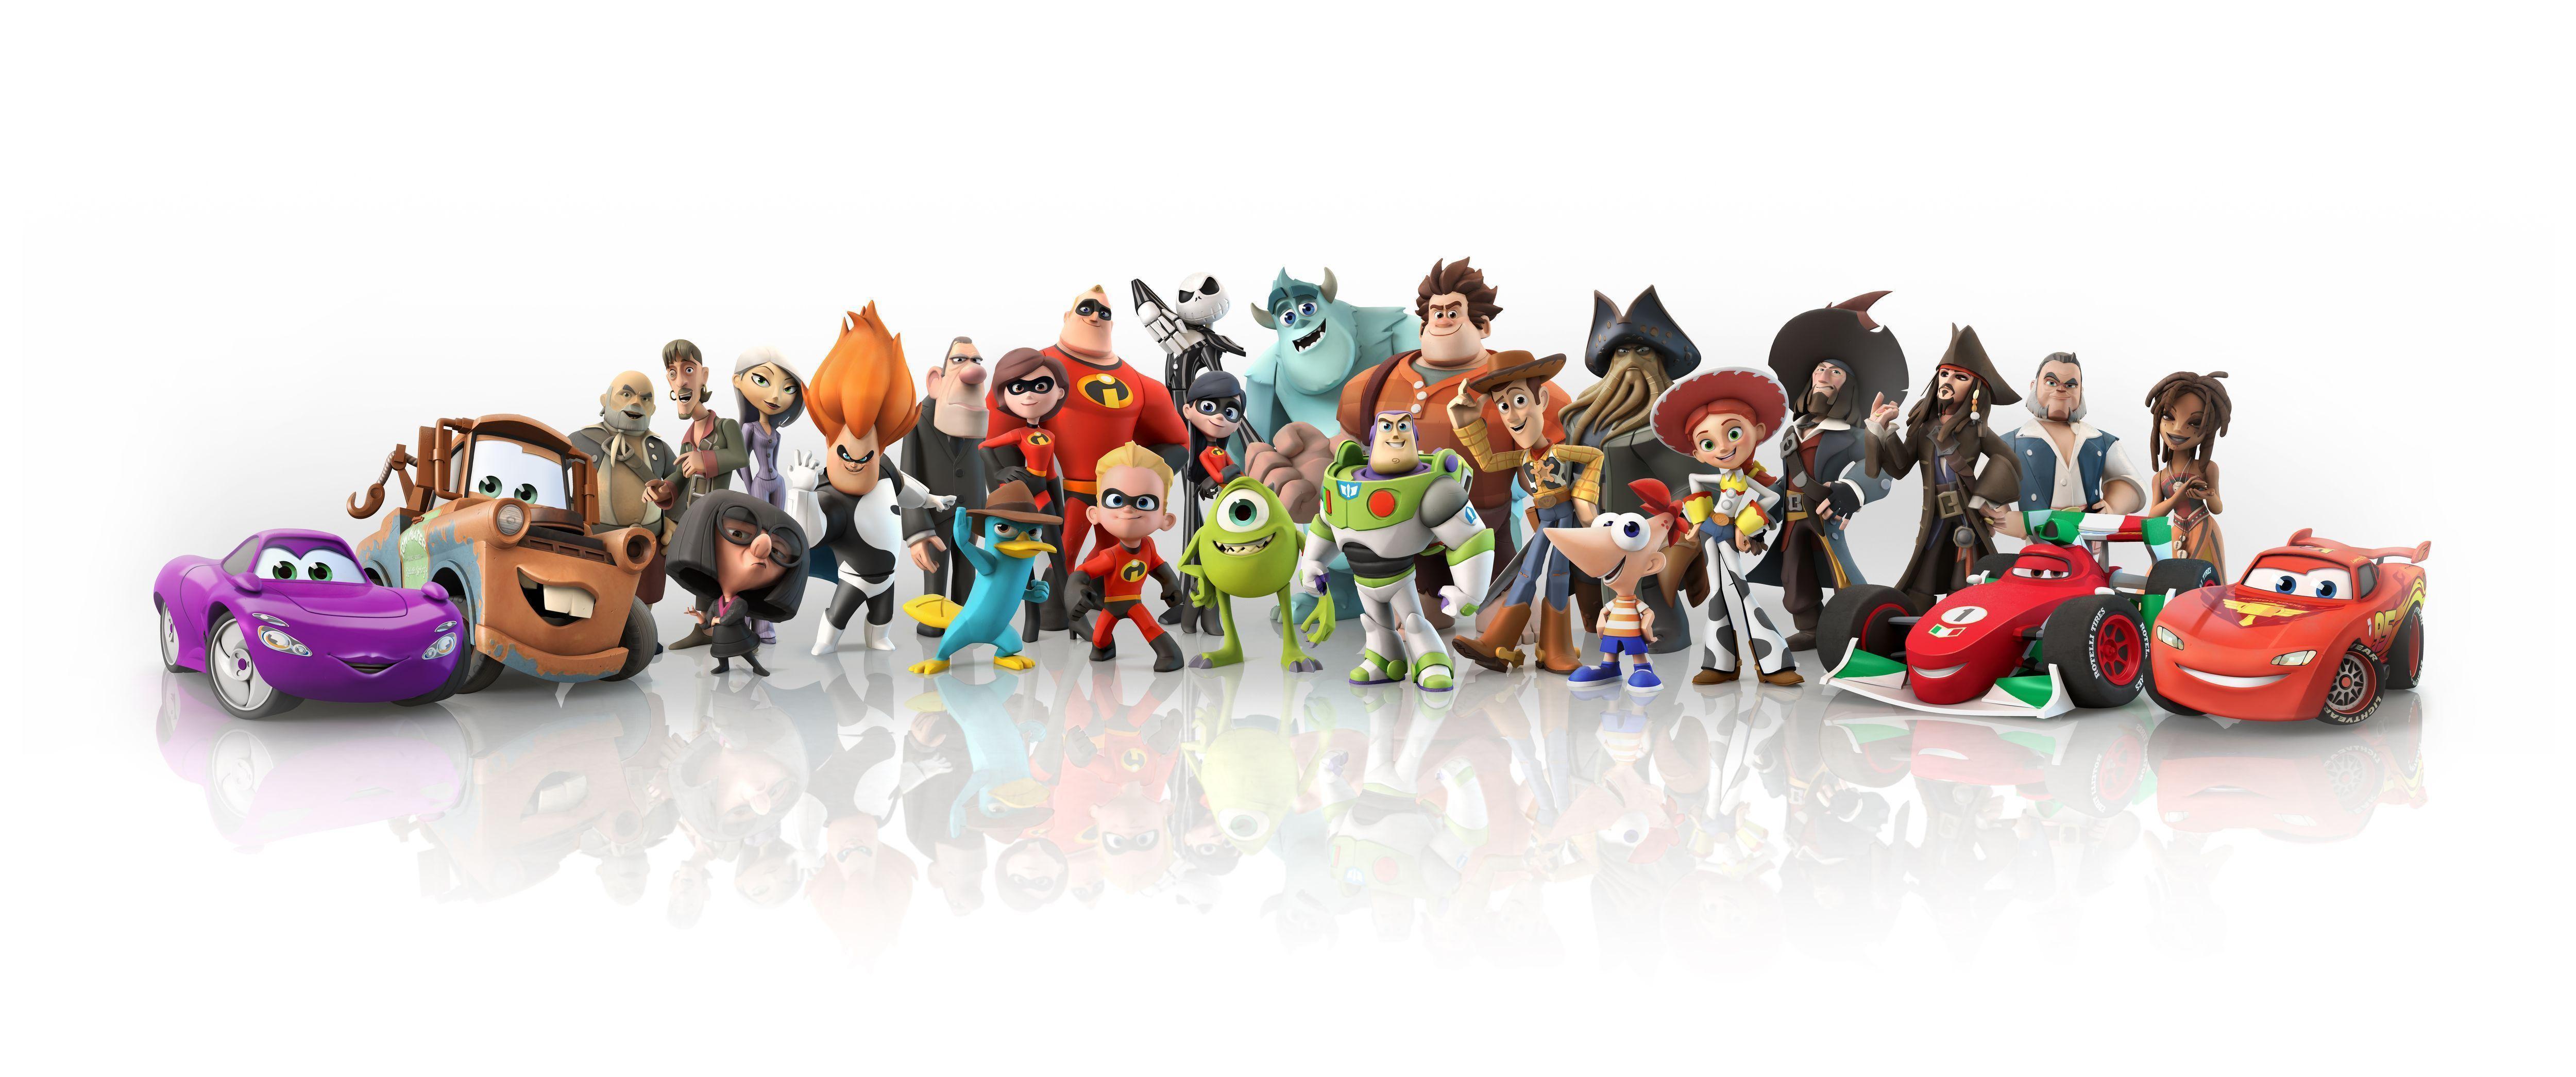 Disney Pixar Compilation Image HD Wallpapers Download